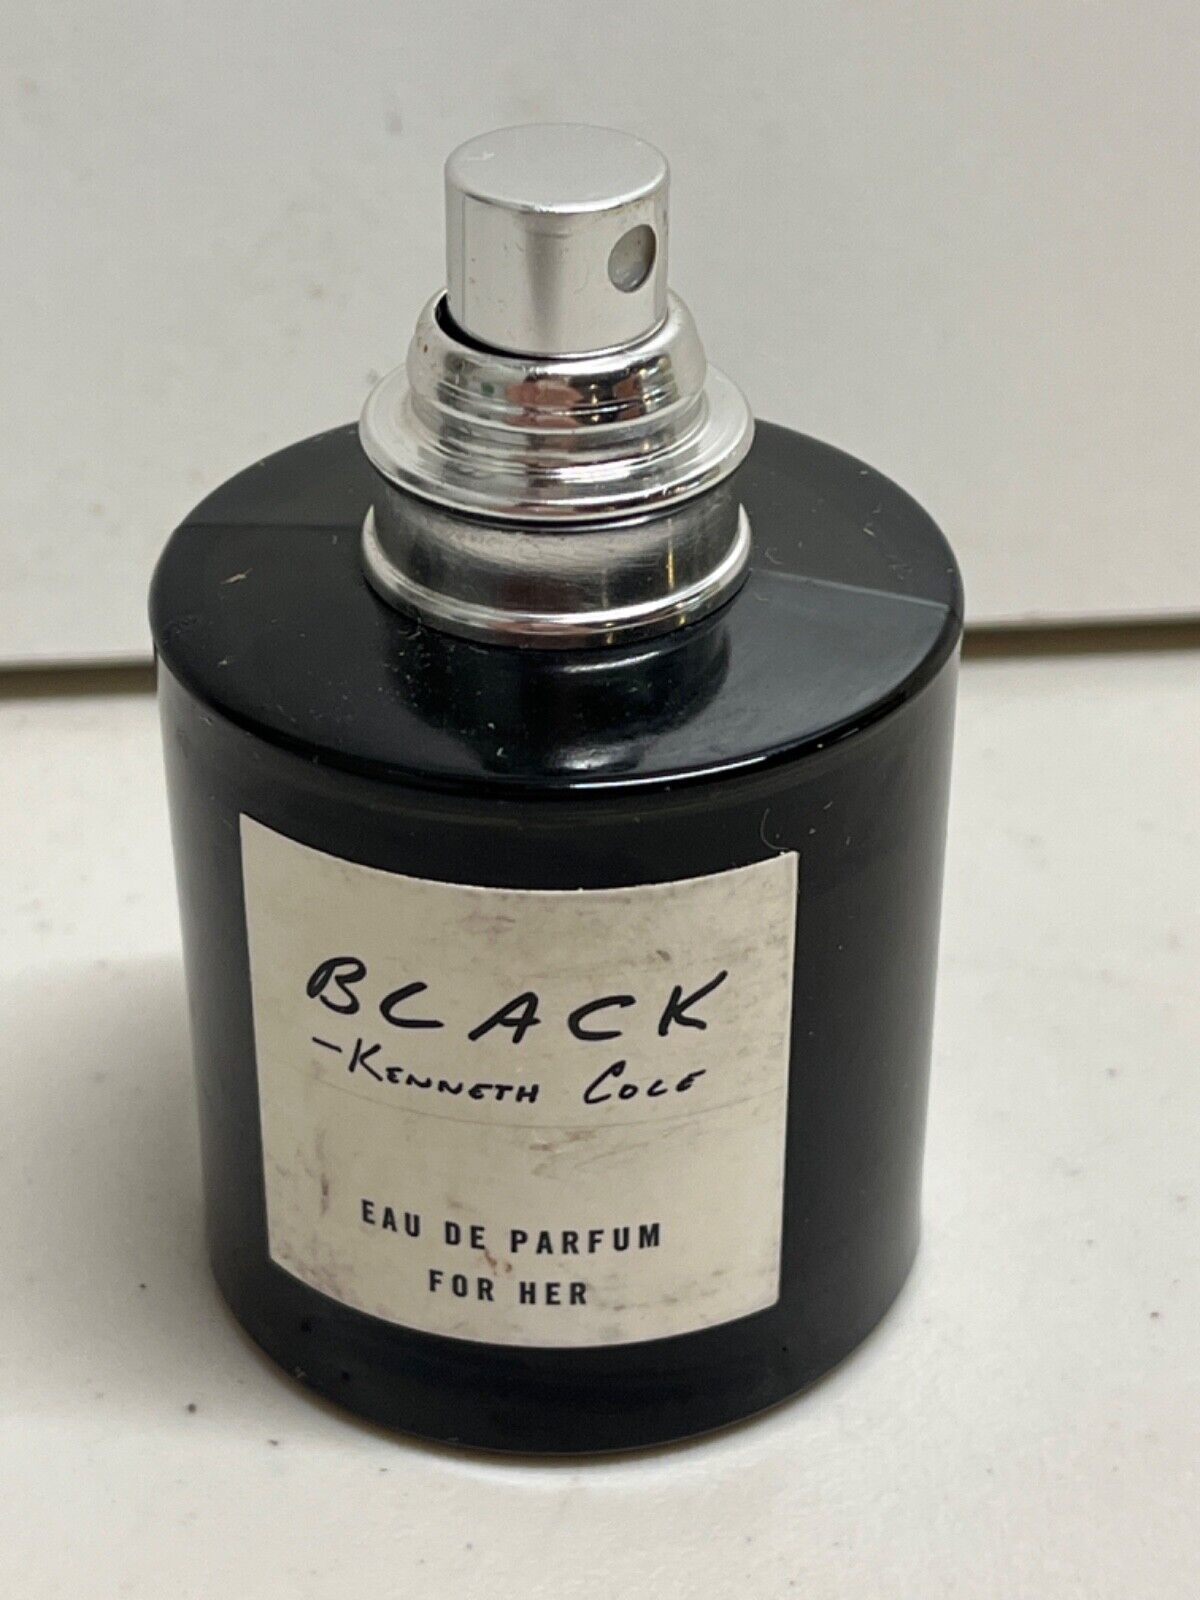 Black Kenneth Cole Eau De Parfum for Her 50 ml bottle partially full